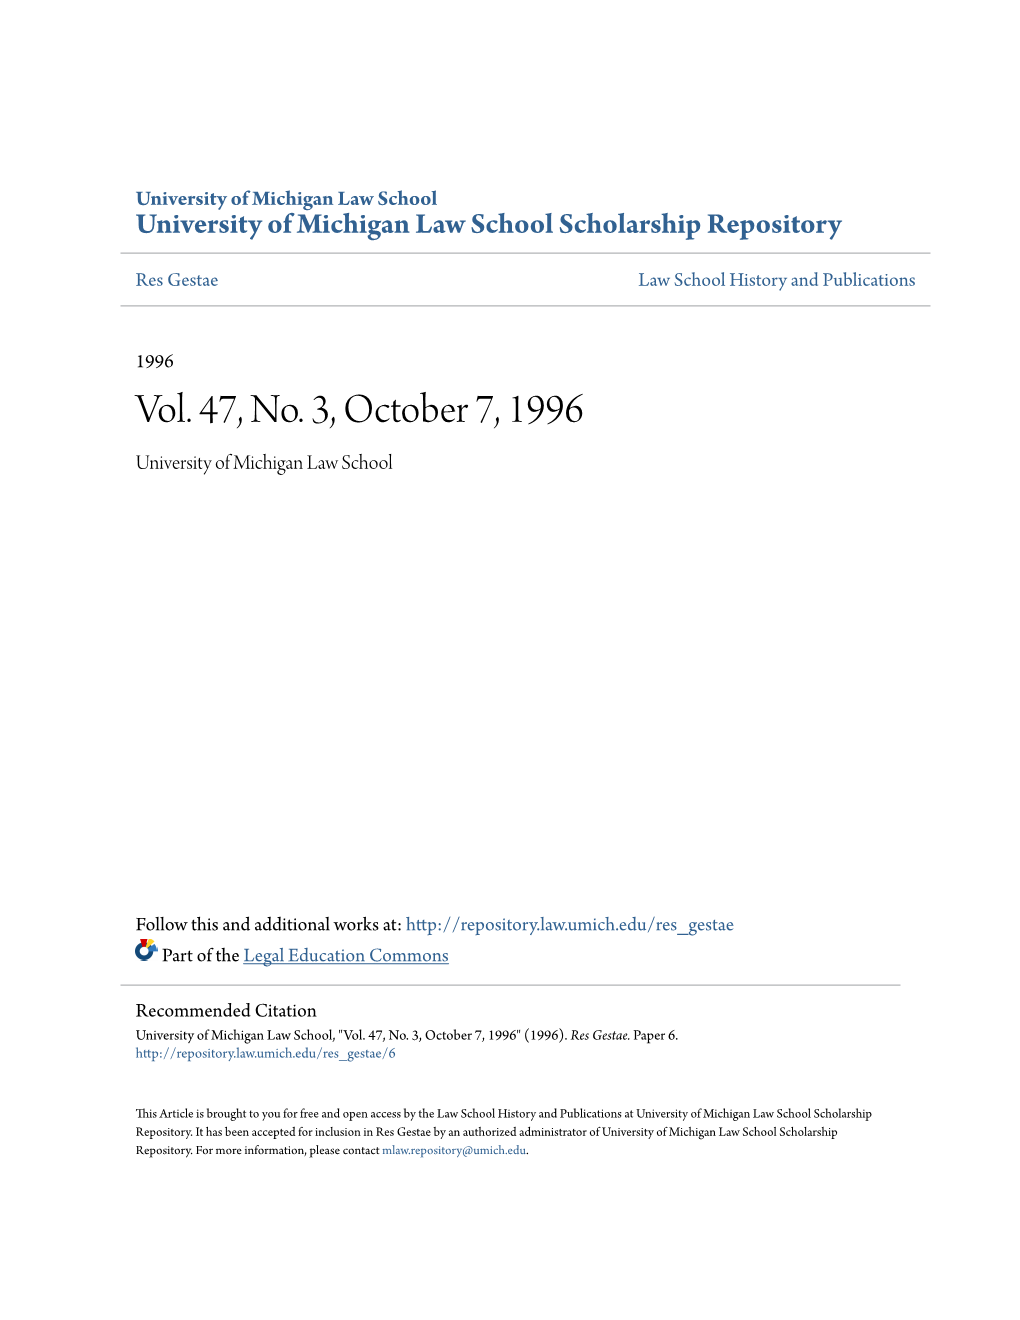 Vol. 47, No. 3, October 7, 1996 University of Michigan Law School